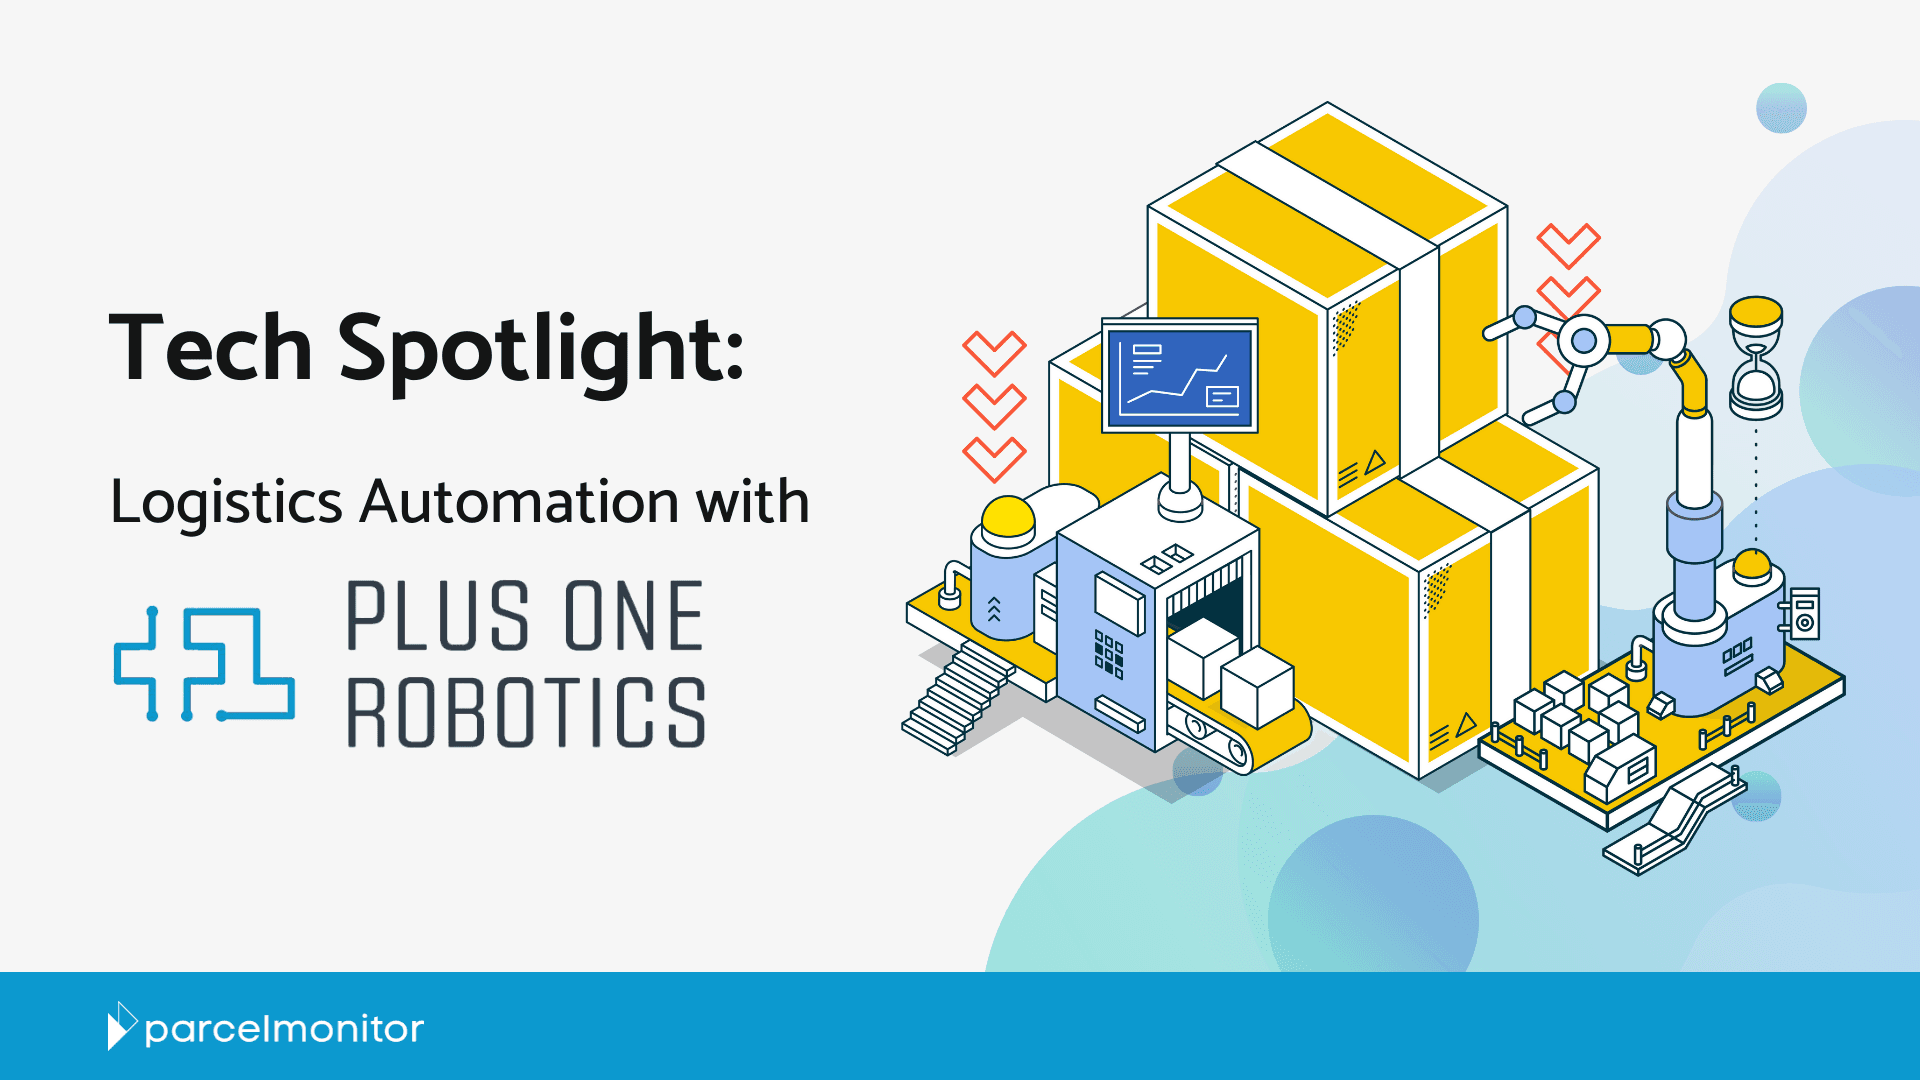 Tech Spotlight: Plus One Robotics featured image